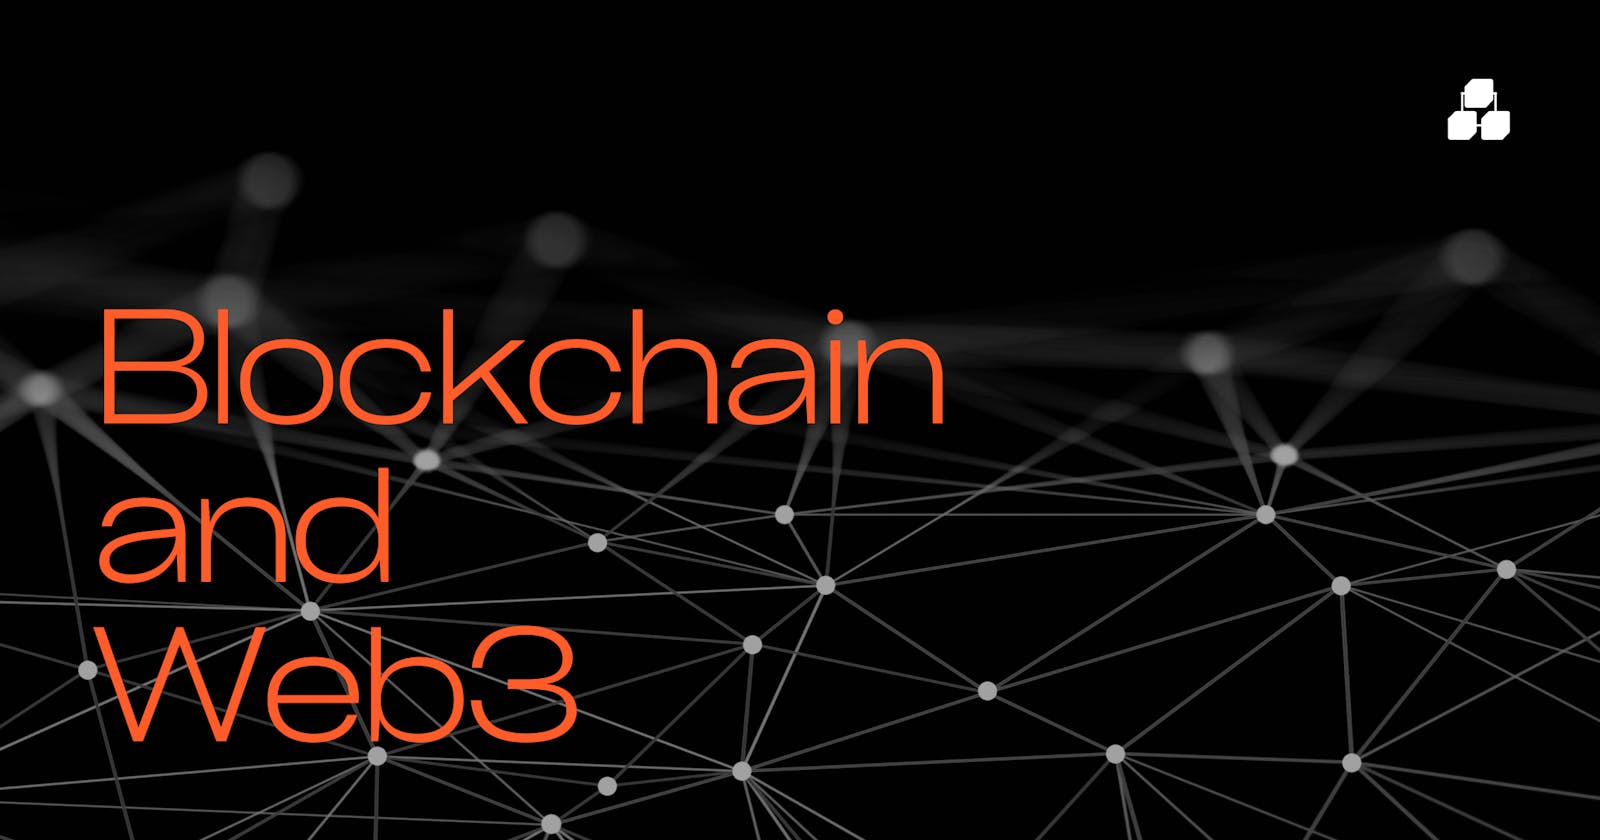 Blockchain and web 3.0